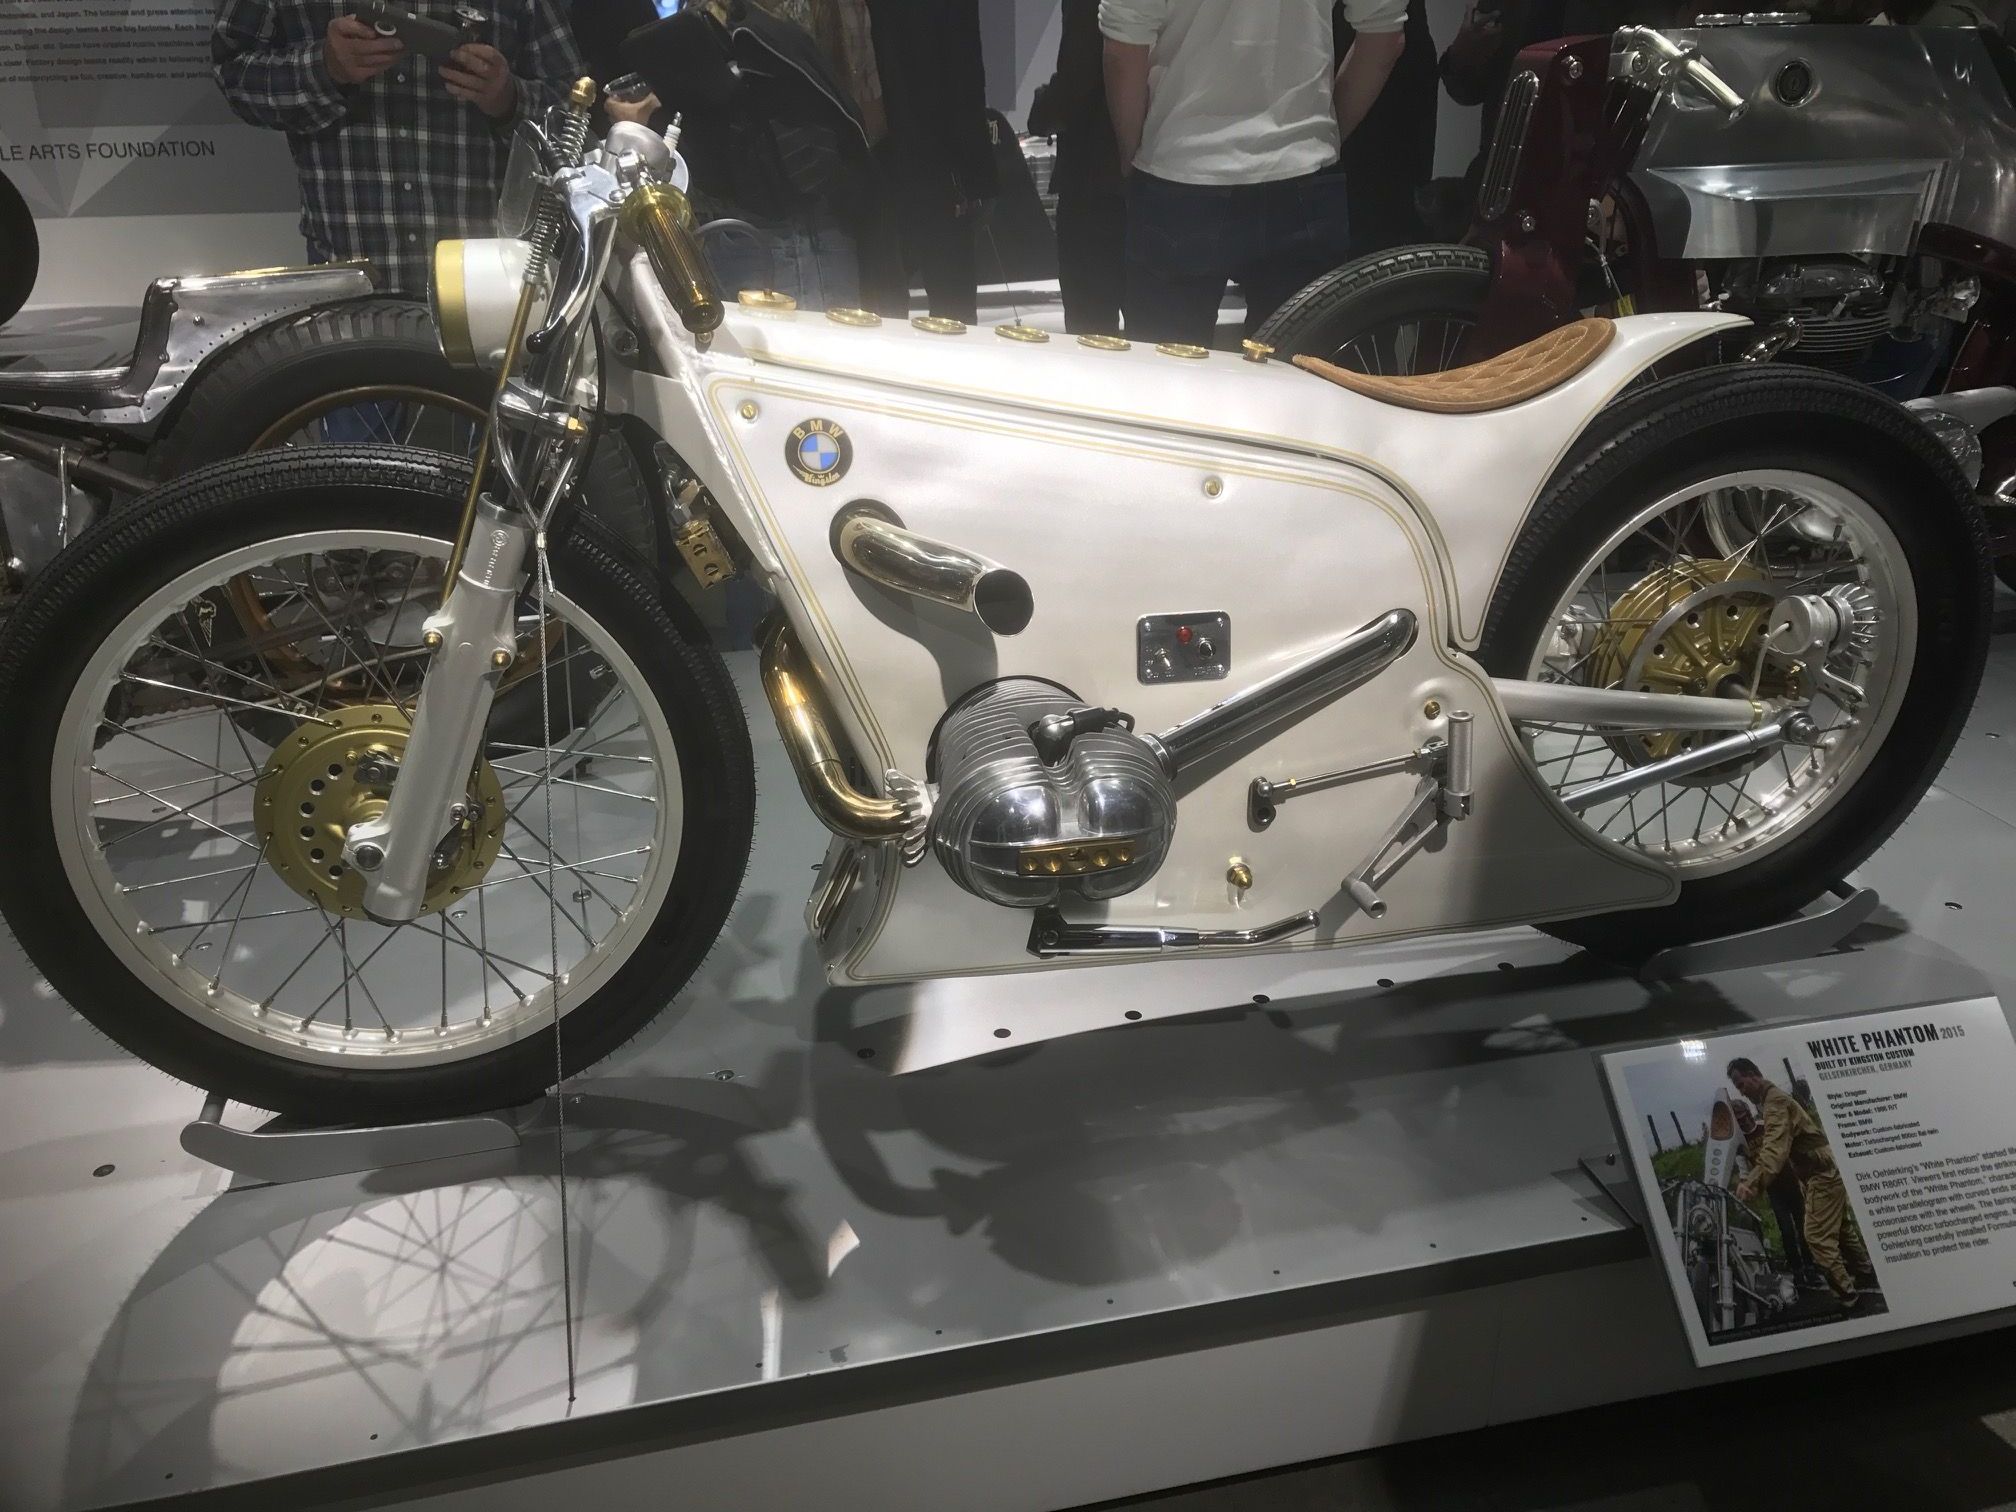 Kingston Custom's "White Phantom" was one of my favorite bikes at the exhibit 